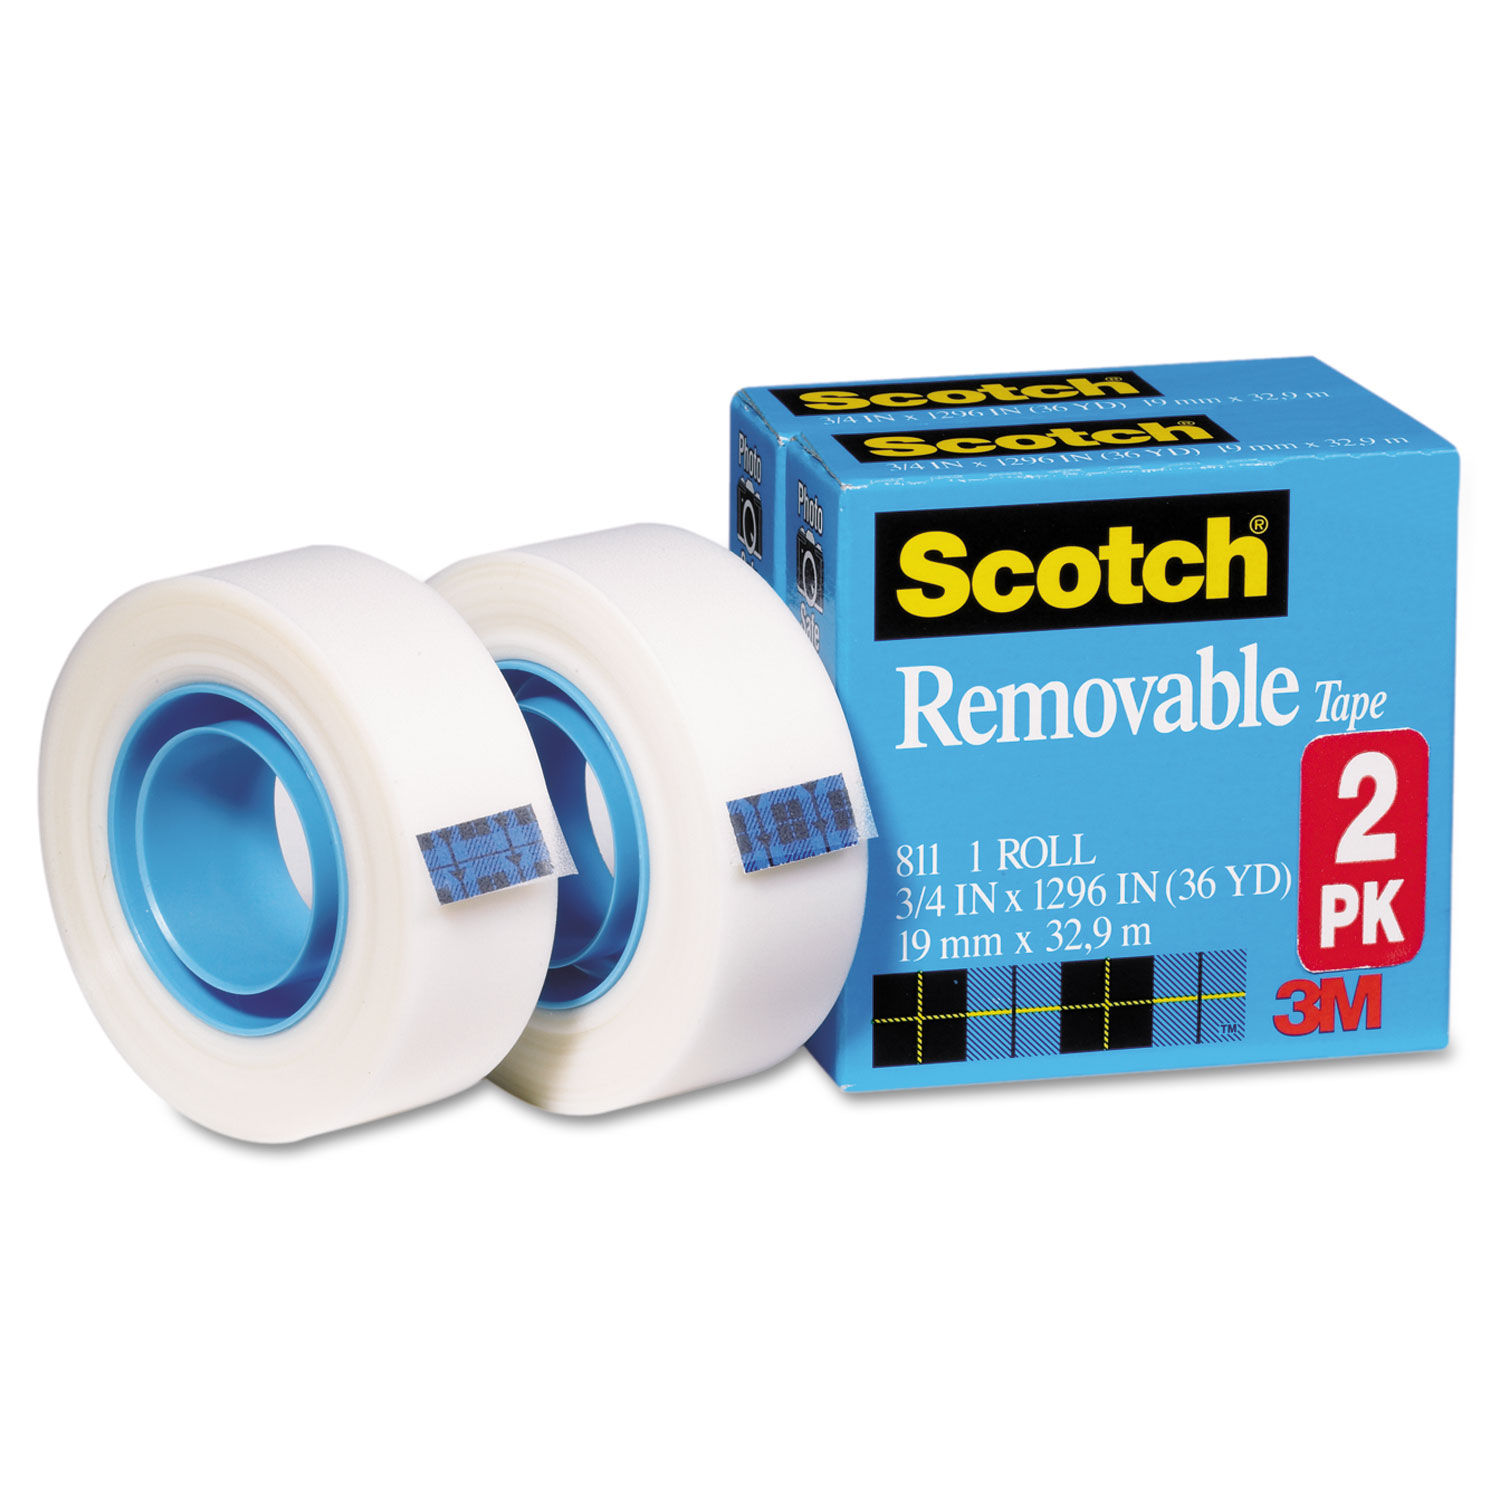 Removable Tape by Scotch® MMM8112PK